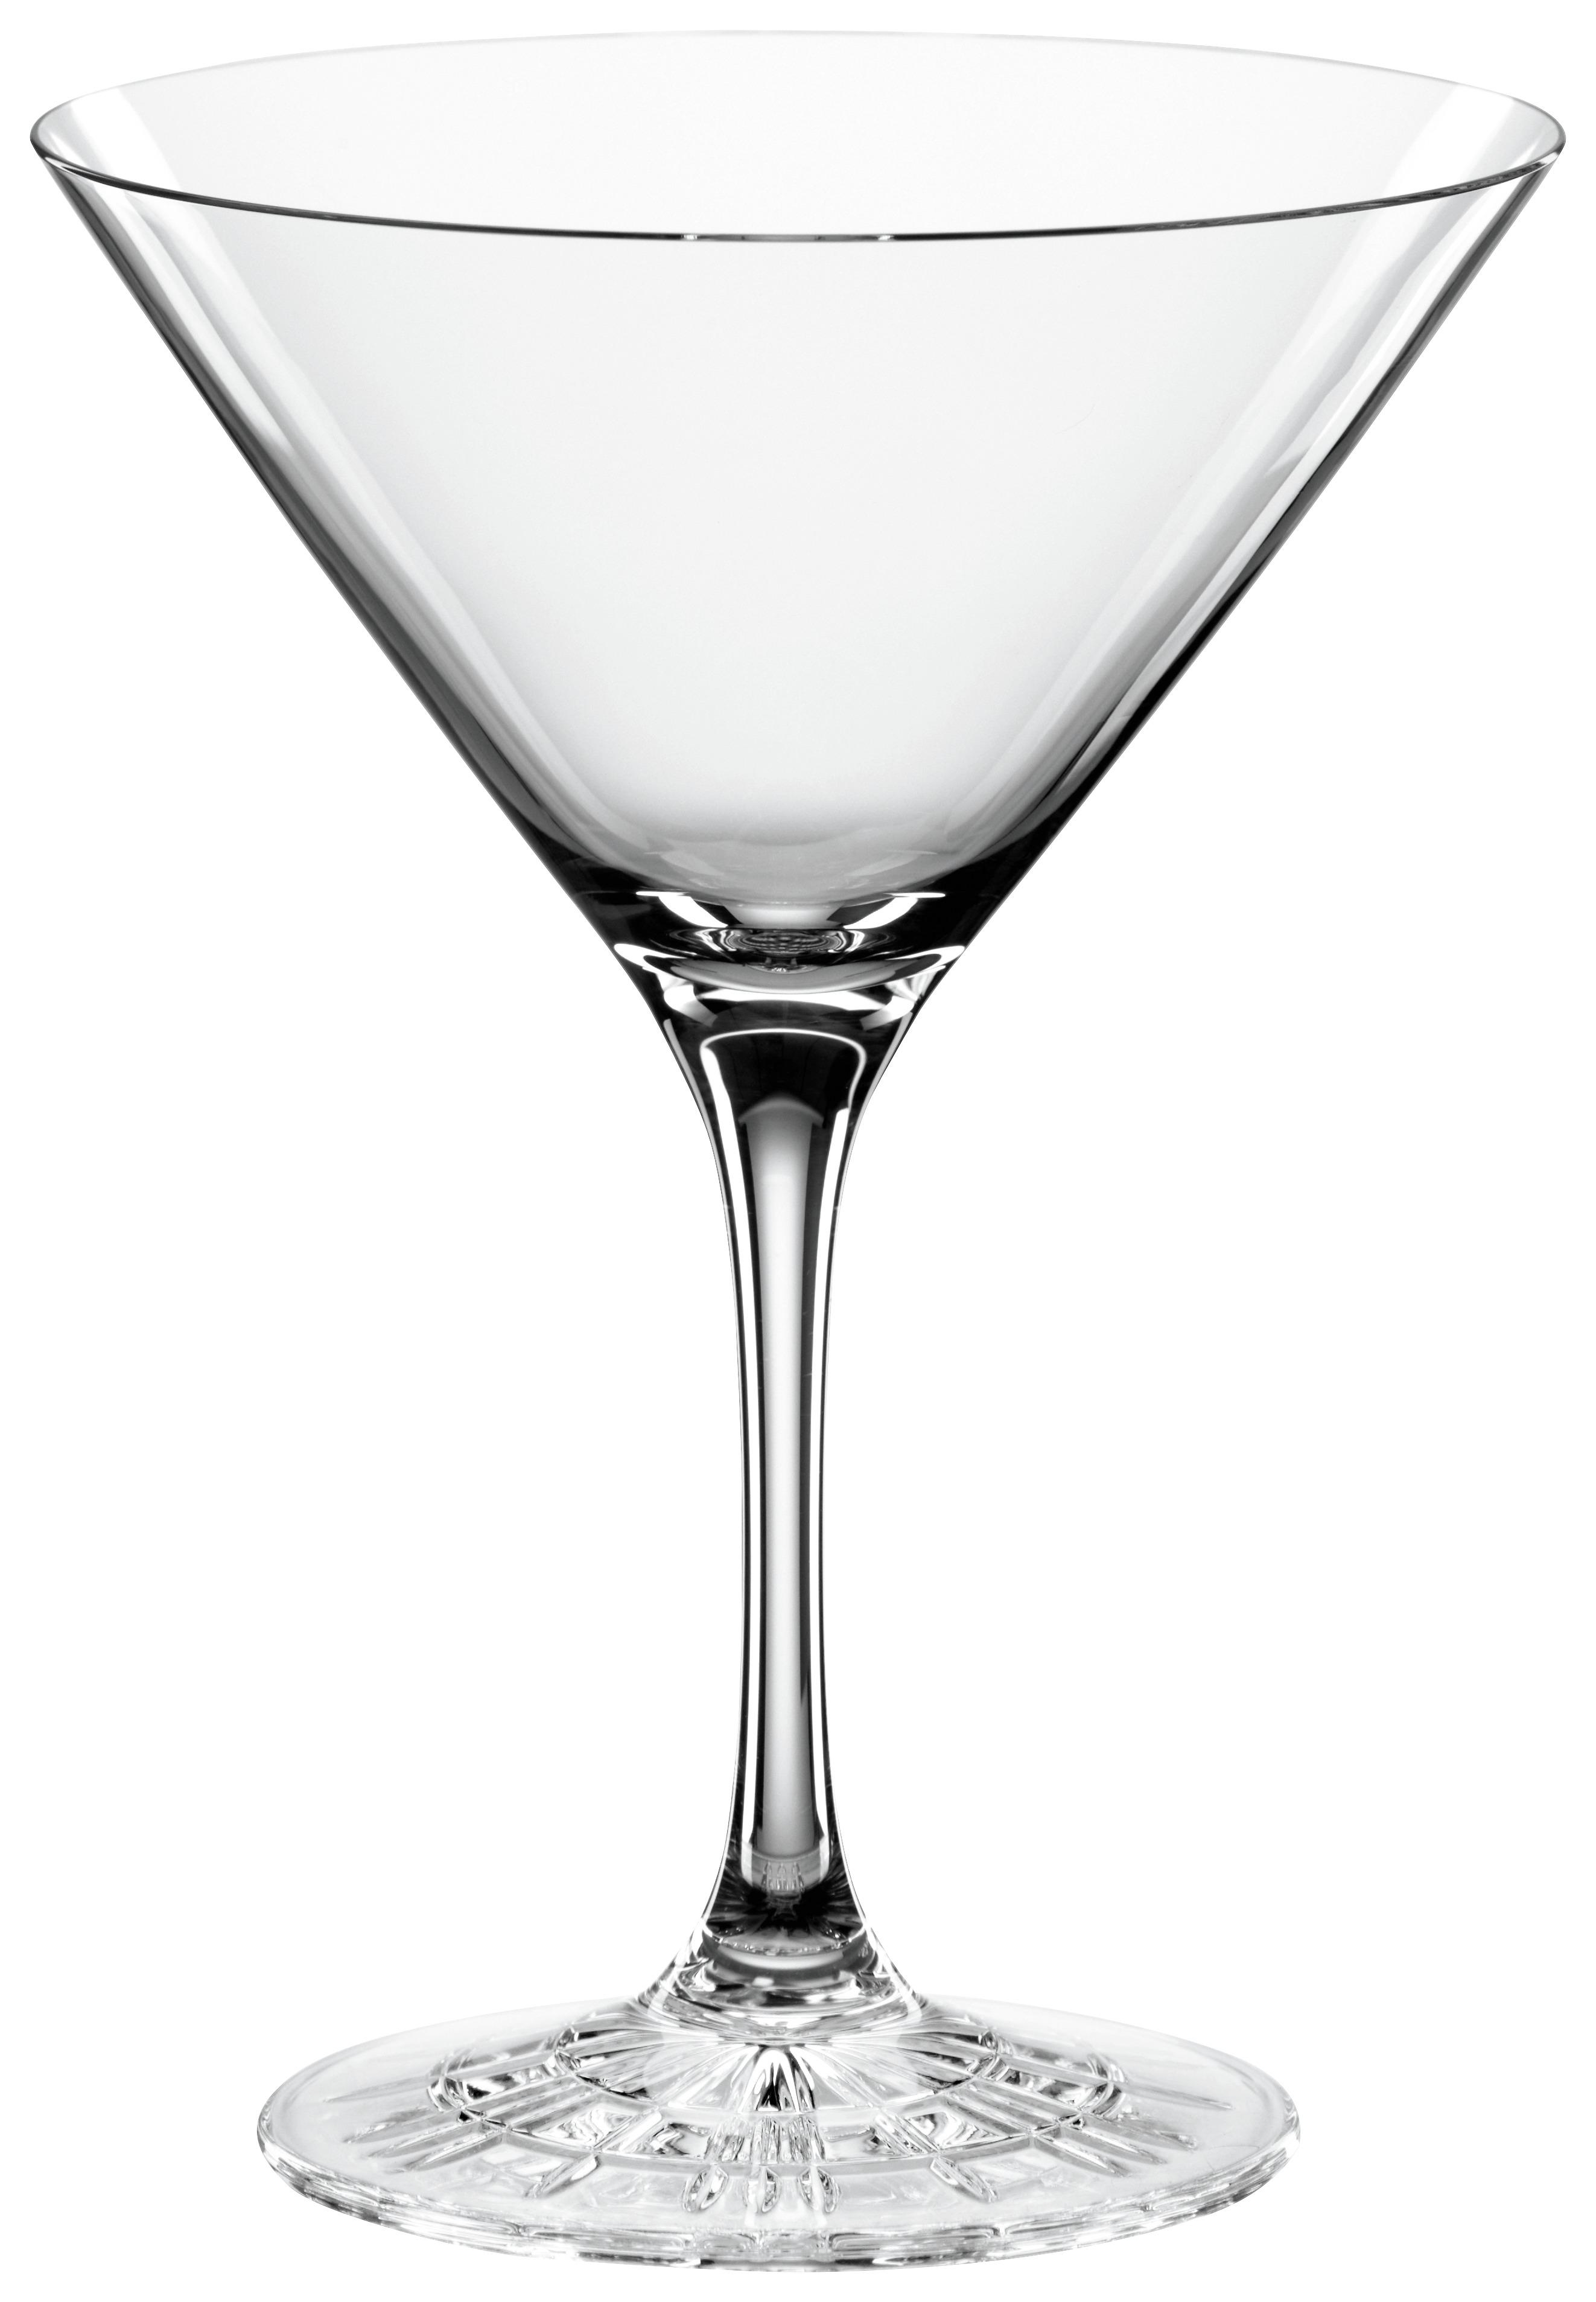 Gläserset Perfect Serve, 4-teilig - Klar, MODERN, Glas (10,3/14,0/10,3cm) - Spiegelau